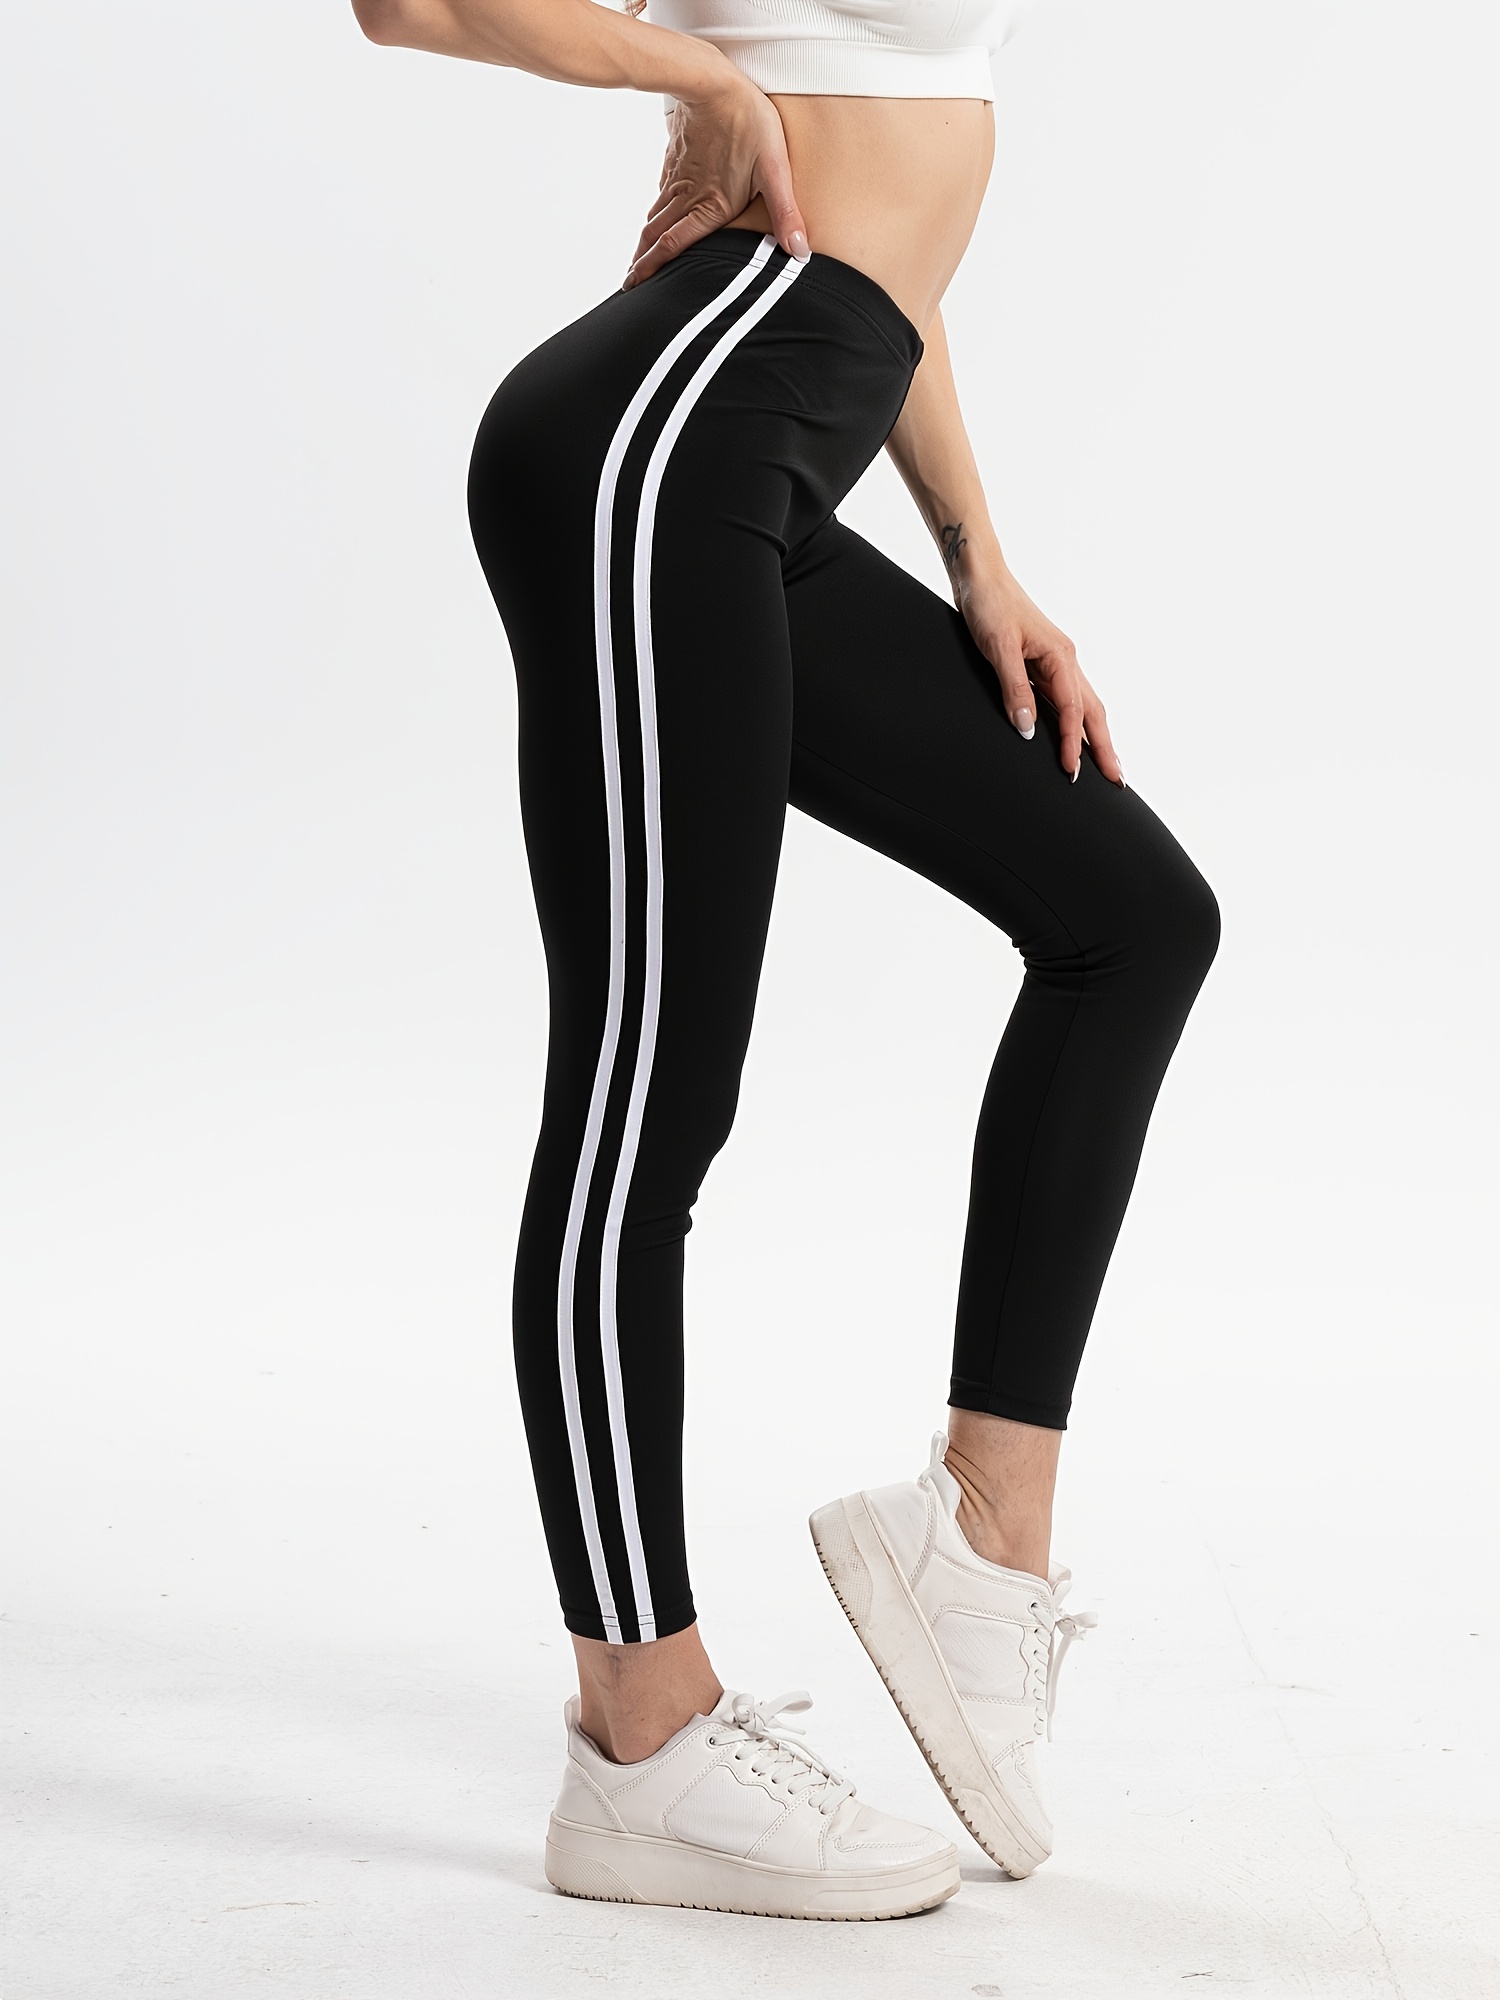 Black and White Vertical Striped Leggings, Women's Yoga Gym